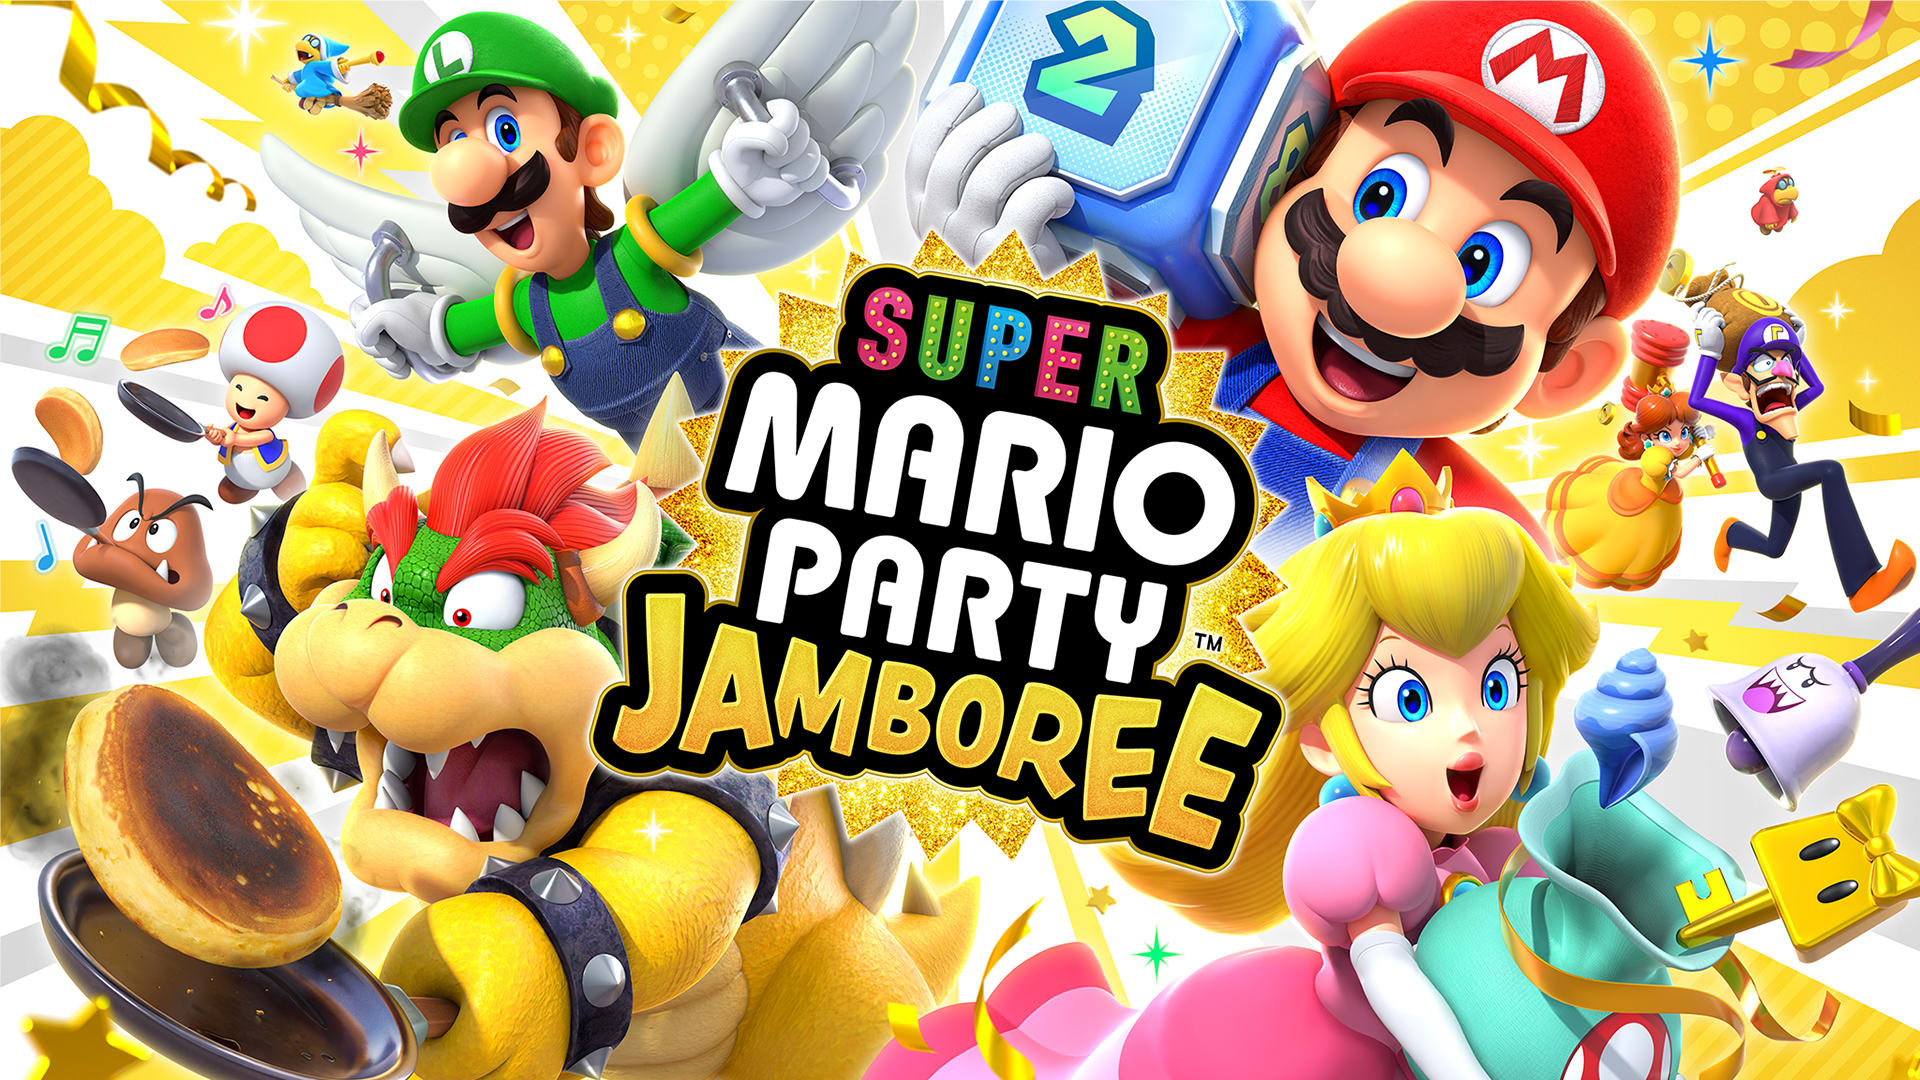 Super Mario Party Jamboree - Nintendo Switch - Games - Nintendo